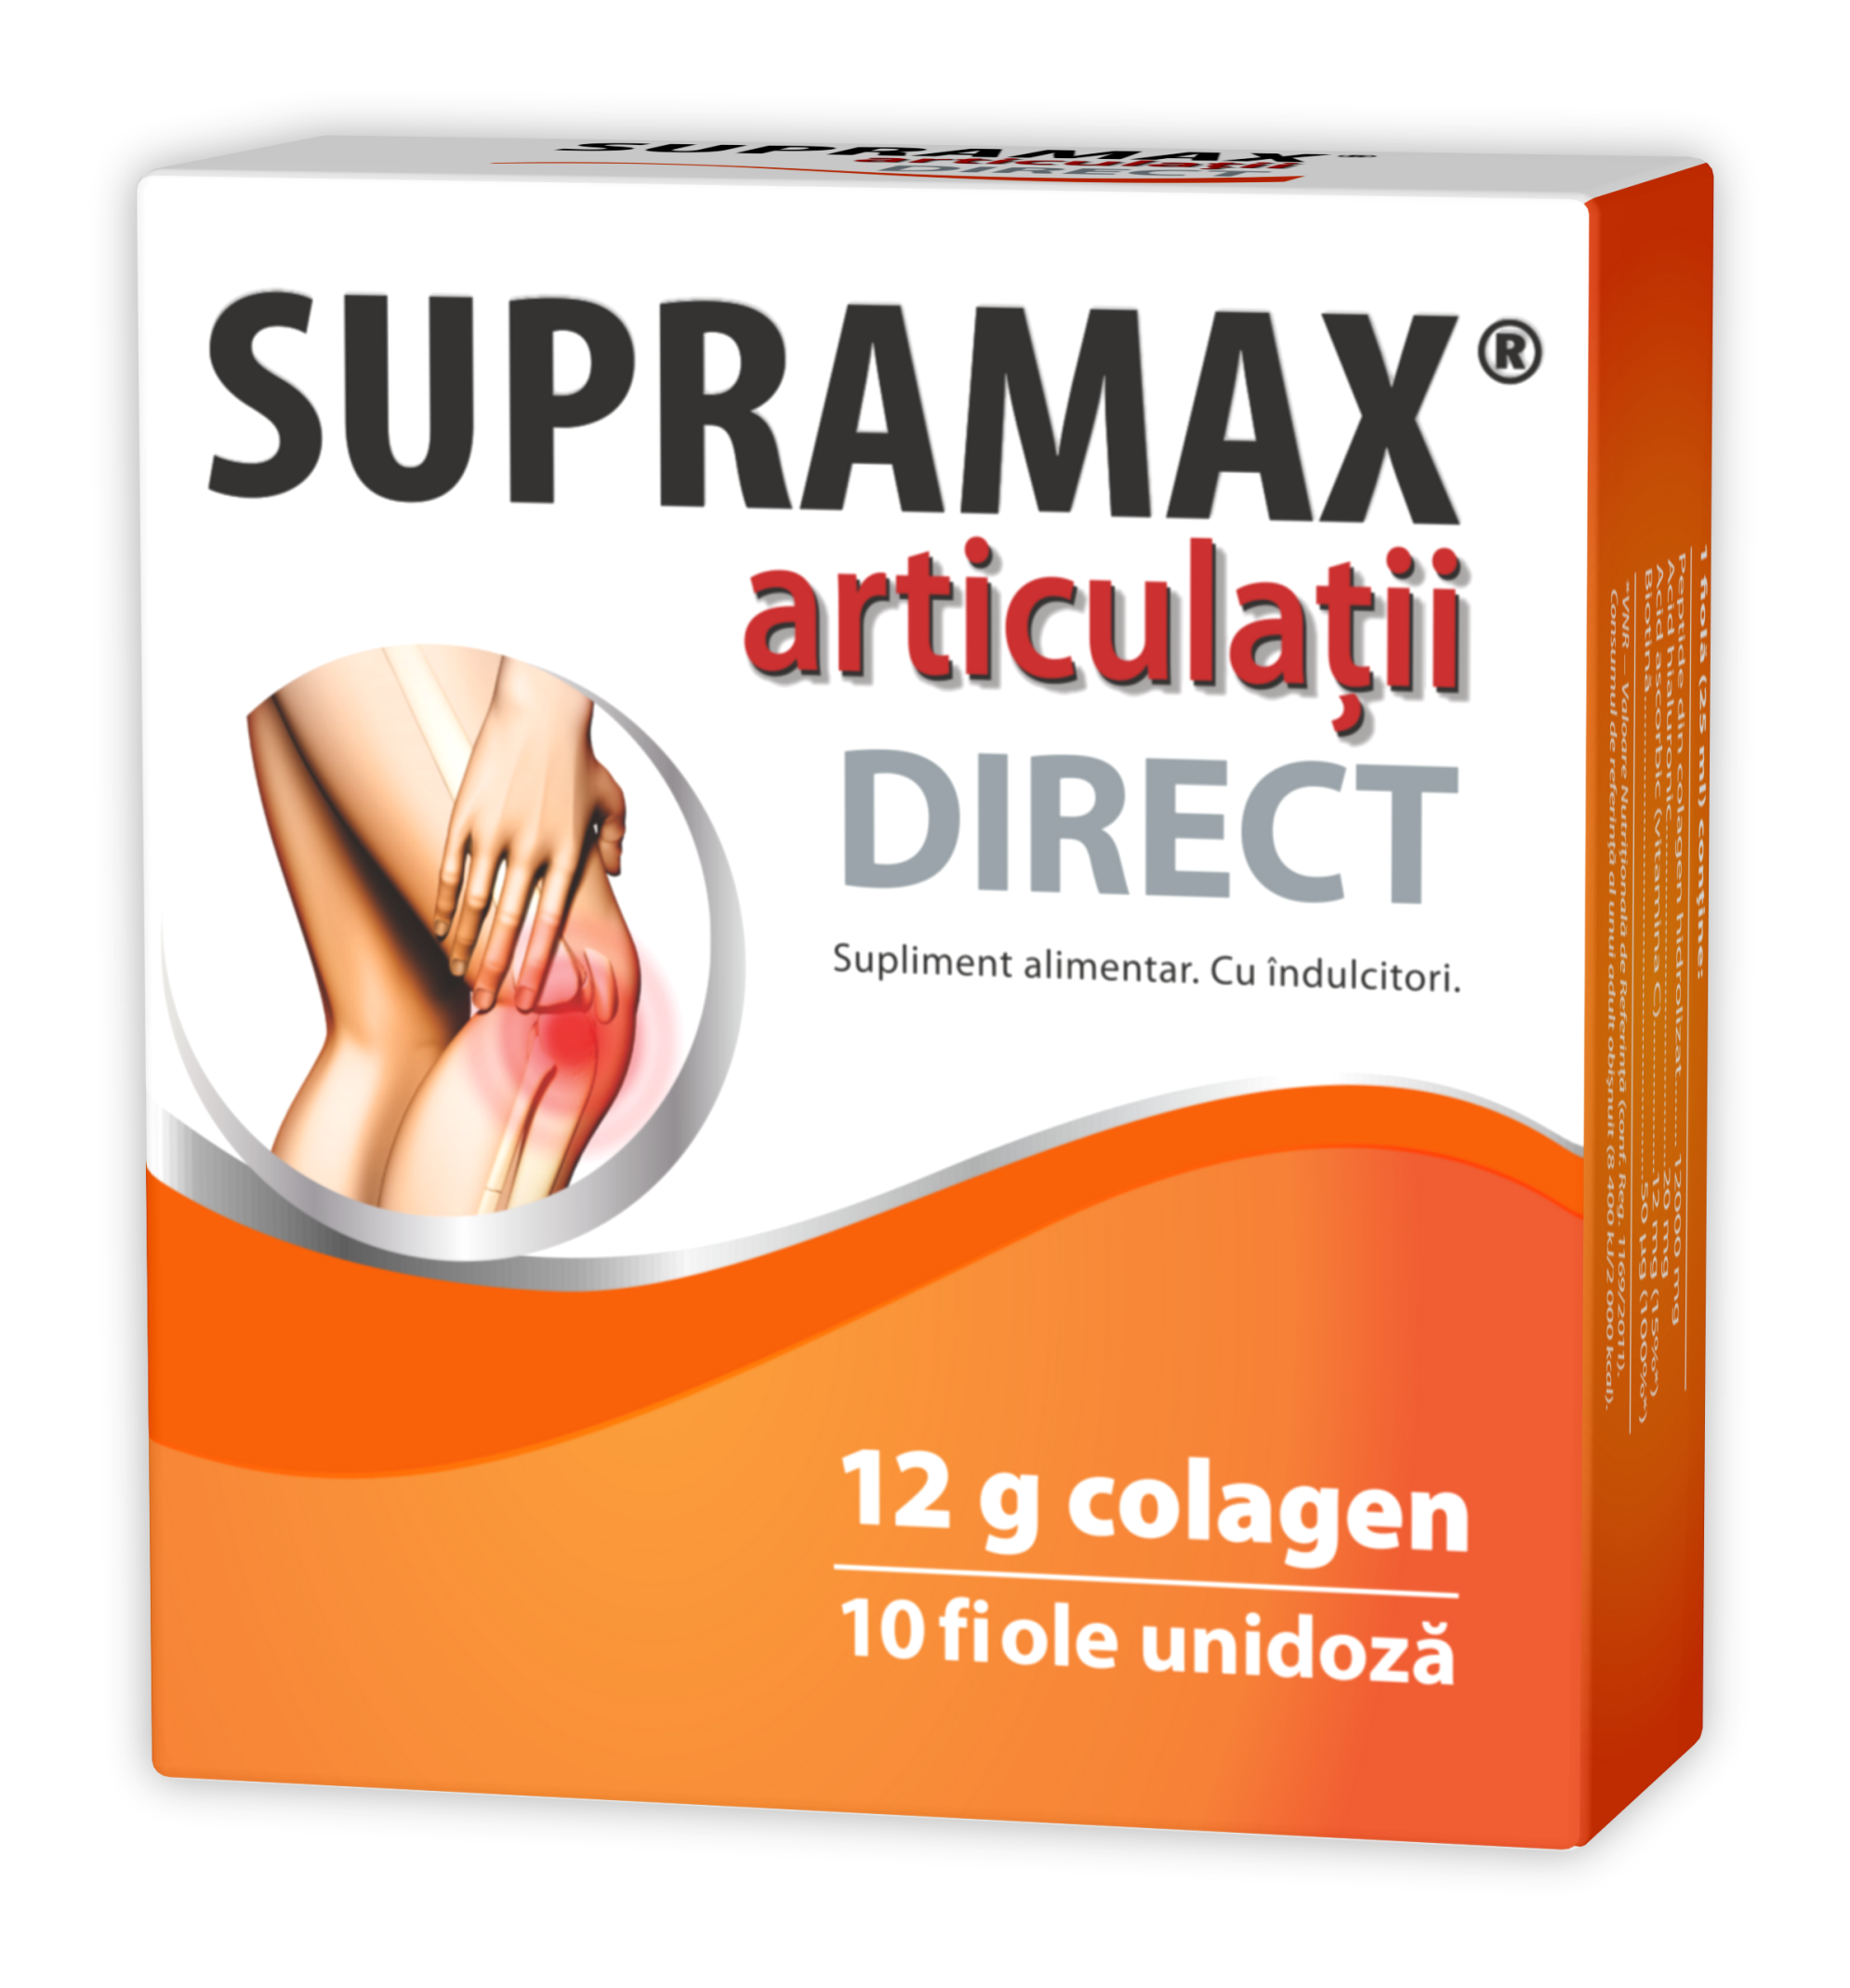 Artroze - Supramax Articulatii direct *10 fiole (Zdrovit), epastila.ro